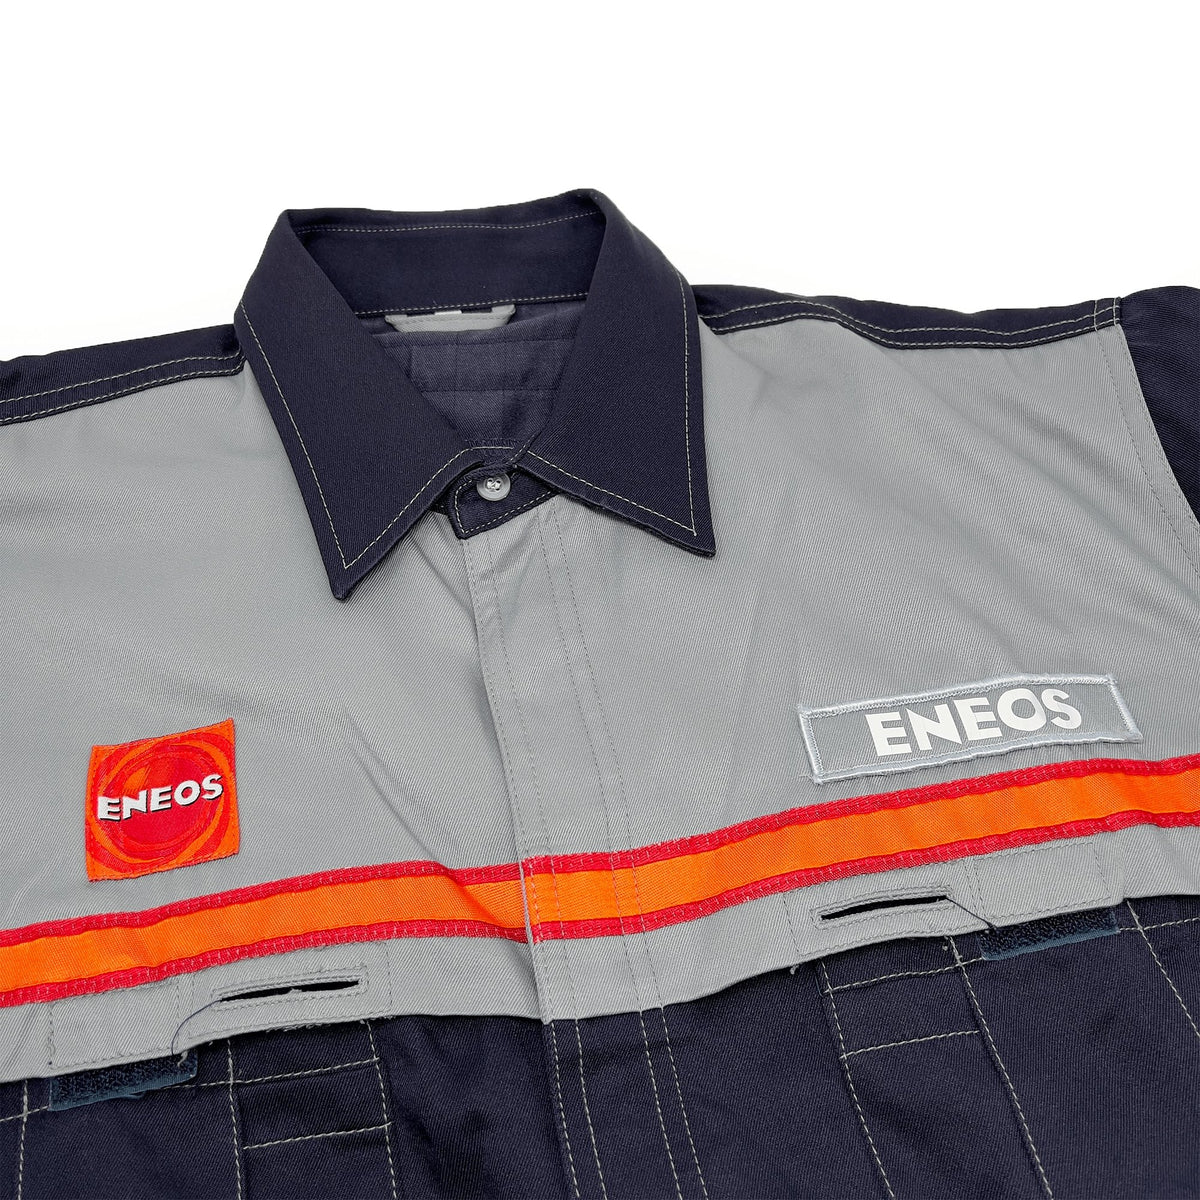 Retro Japan JDM ENEOS Oil Staff Long Sleeve Button Up Shirt Blue - Sugoi JDM